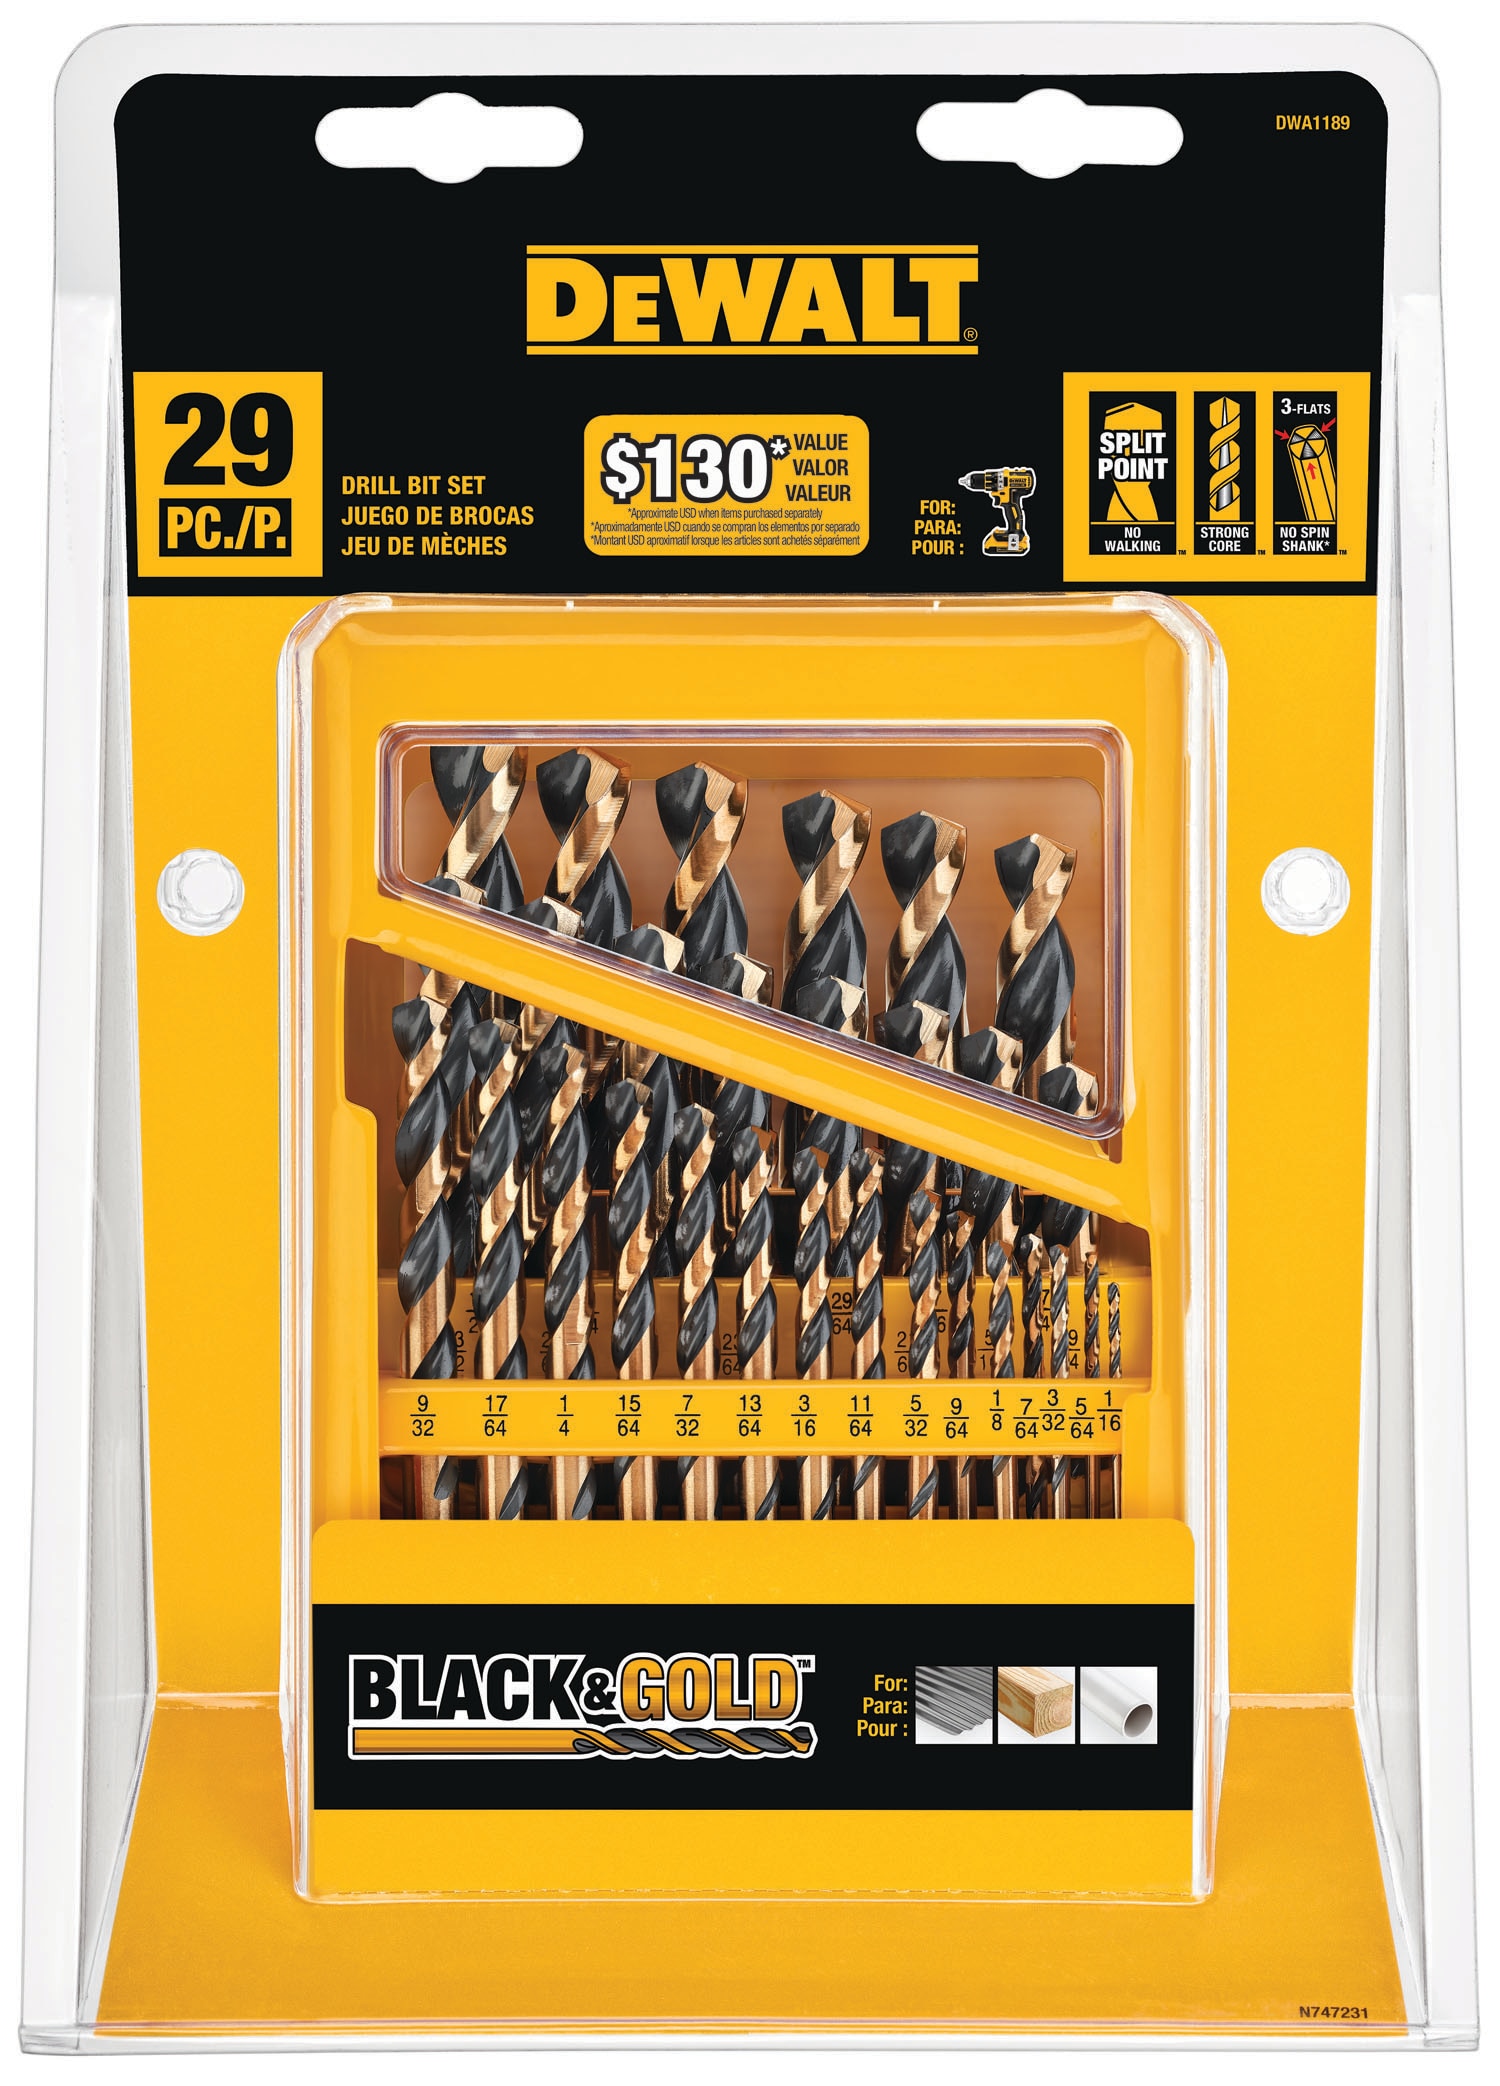 BLACK+DECKER 71-629 29pc Titanium Metal Index Drill Bit Set 